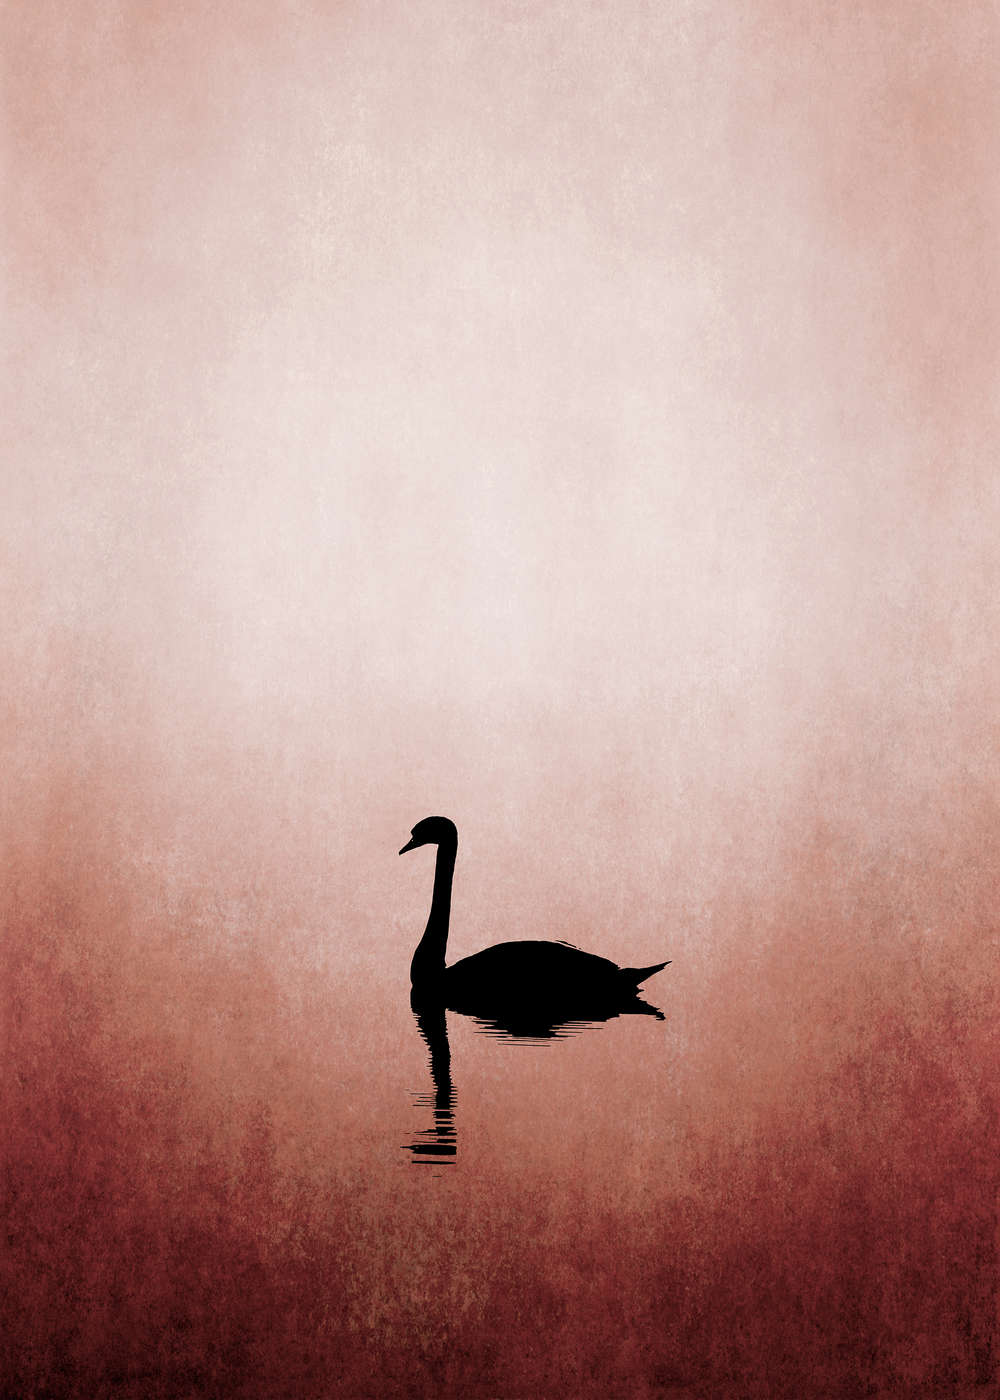             Photo wallpaper swan & lake in minimalist style
        